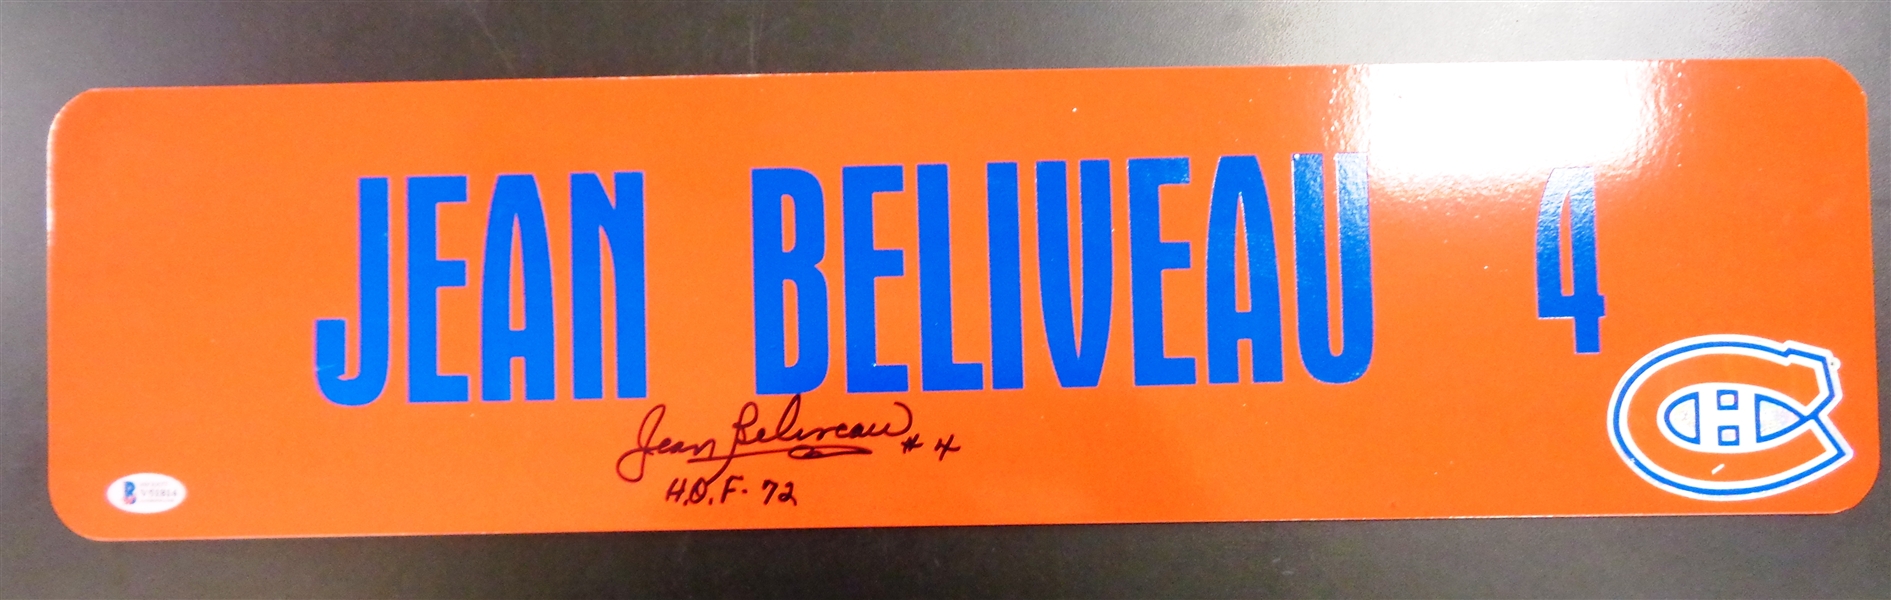 Jean Beliveau Autographed 6x24 Metal Street Sign